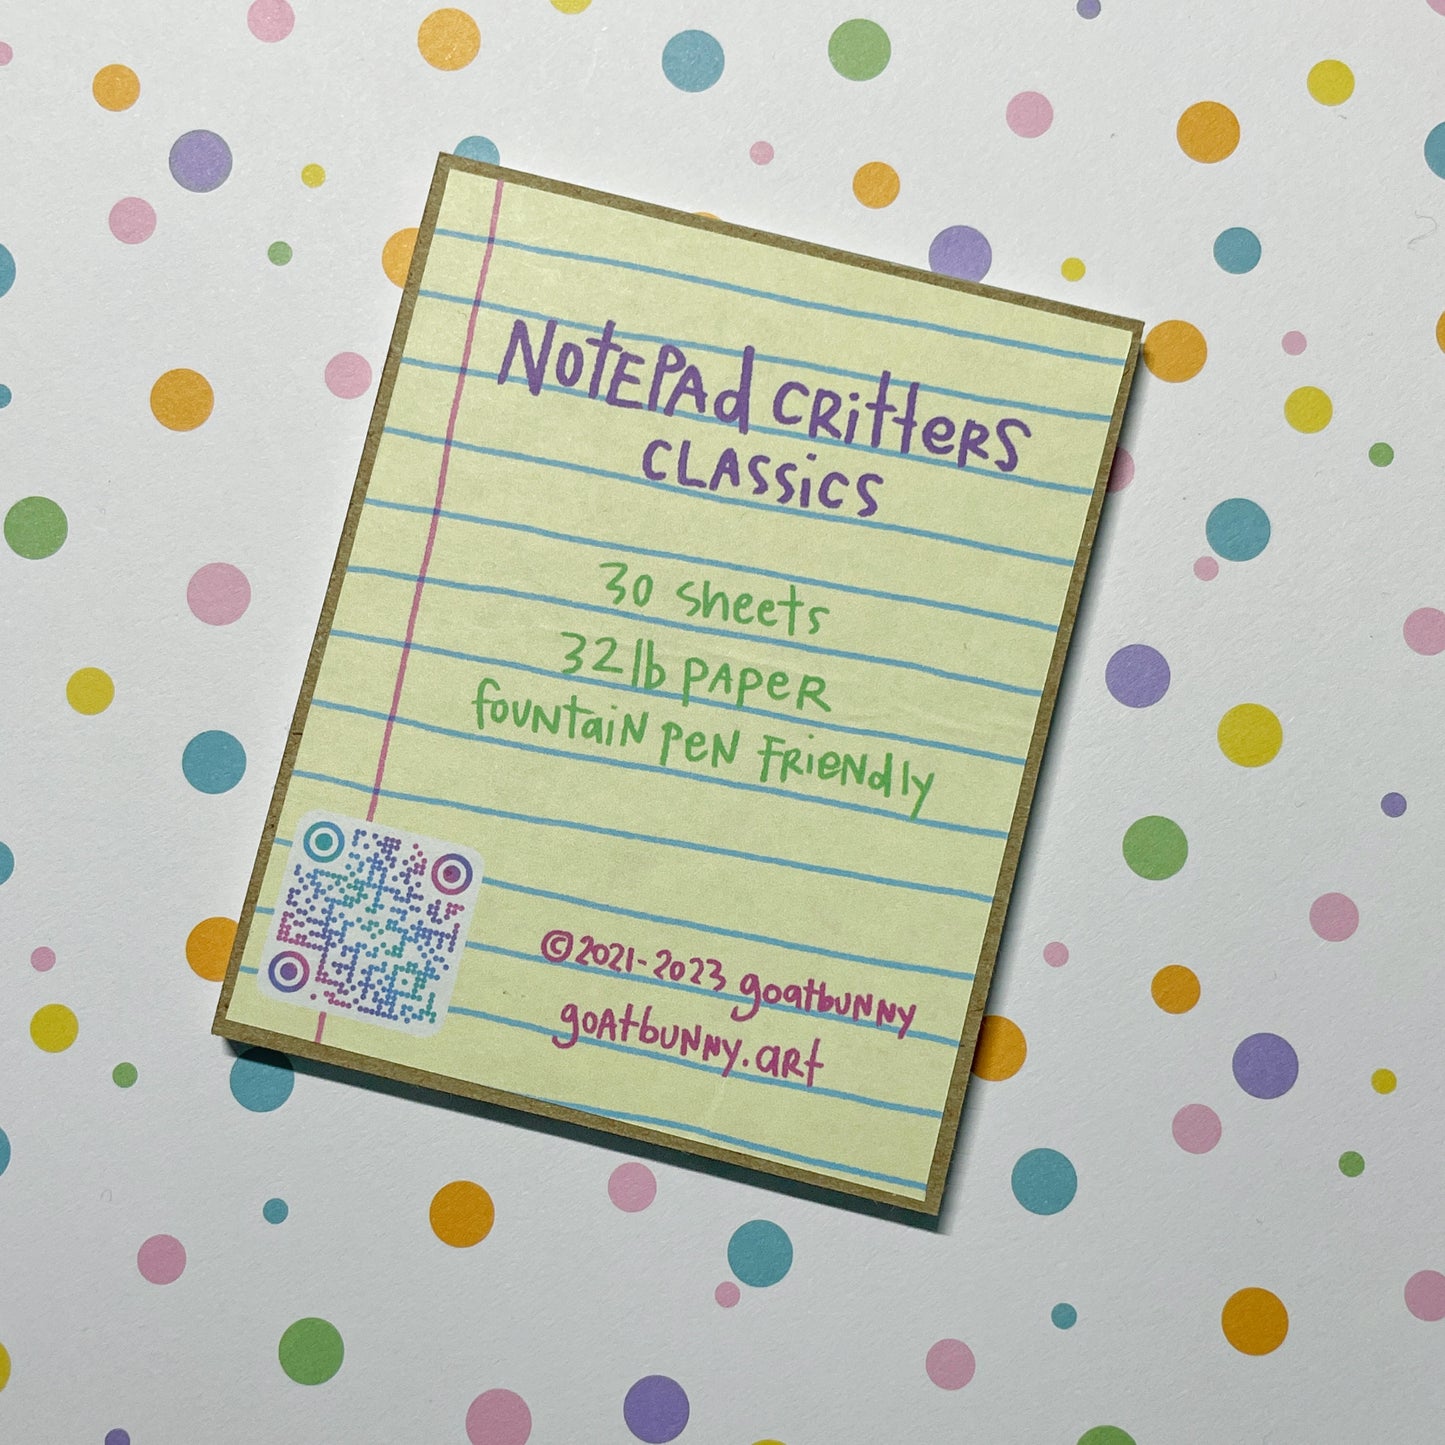 Notepad Critters Classics